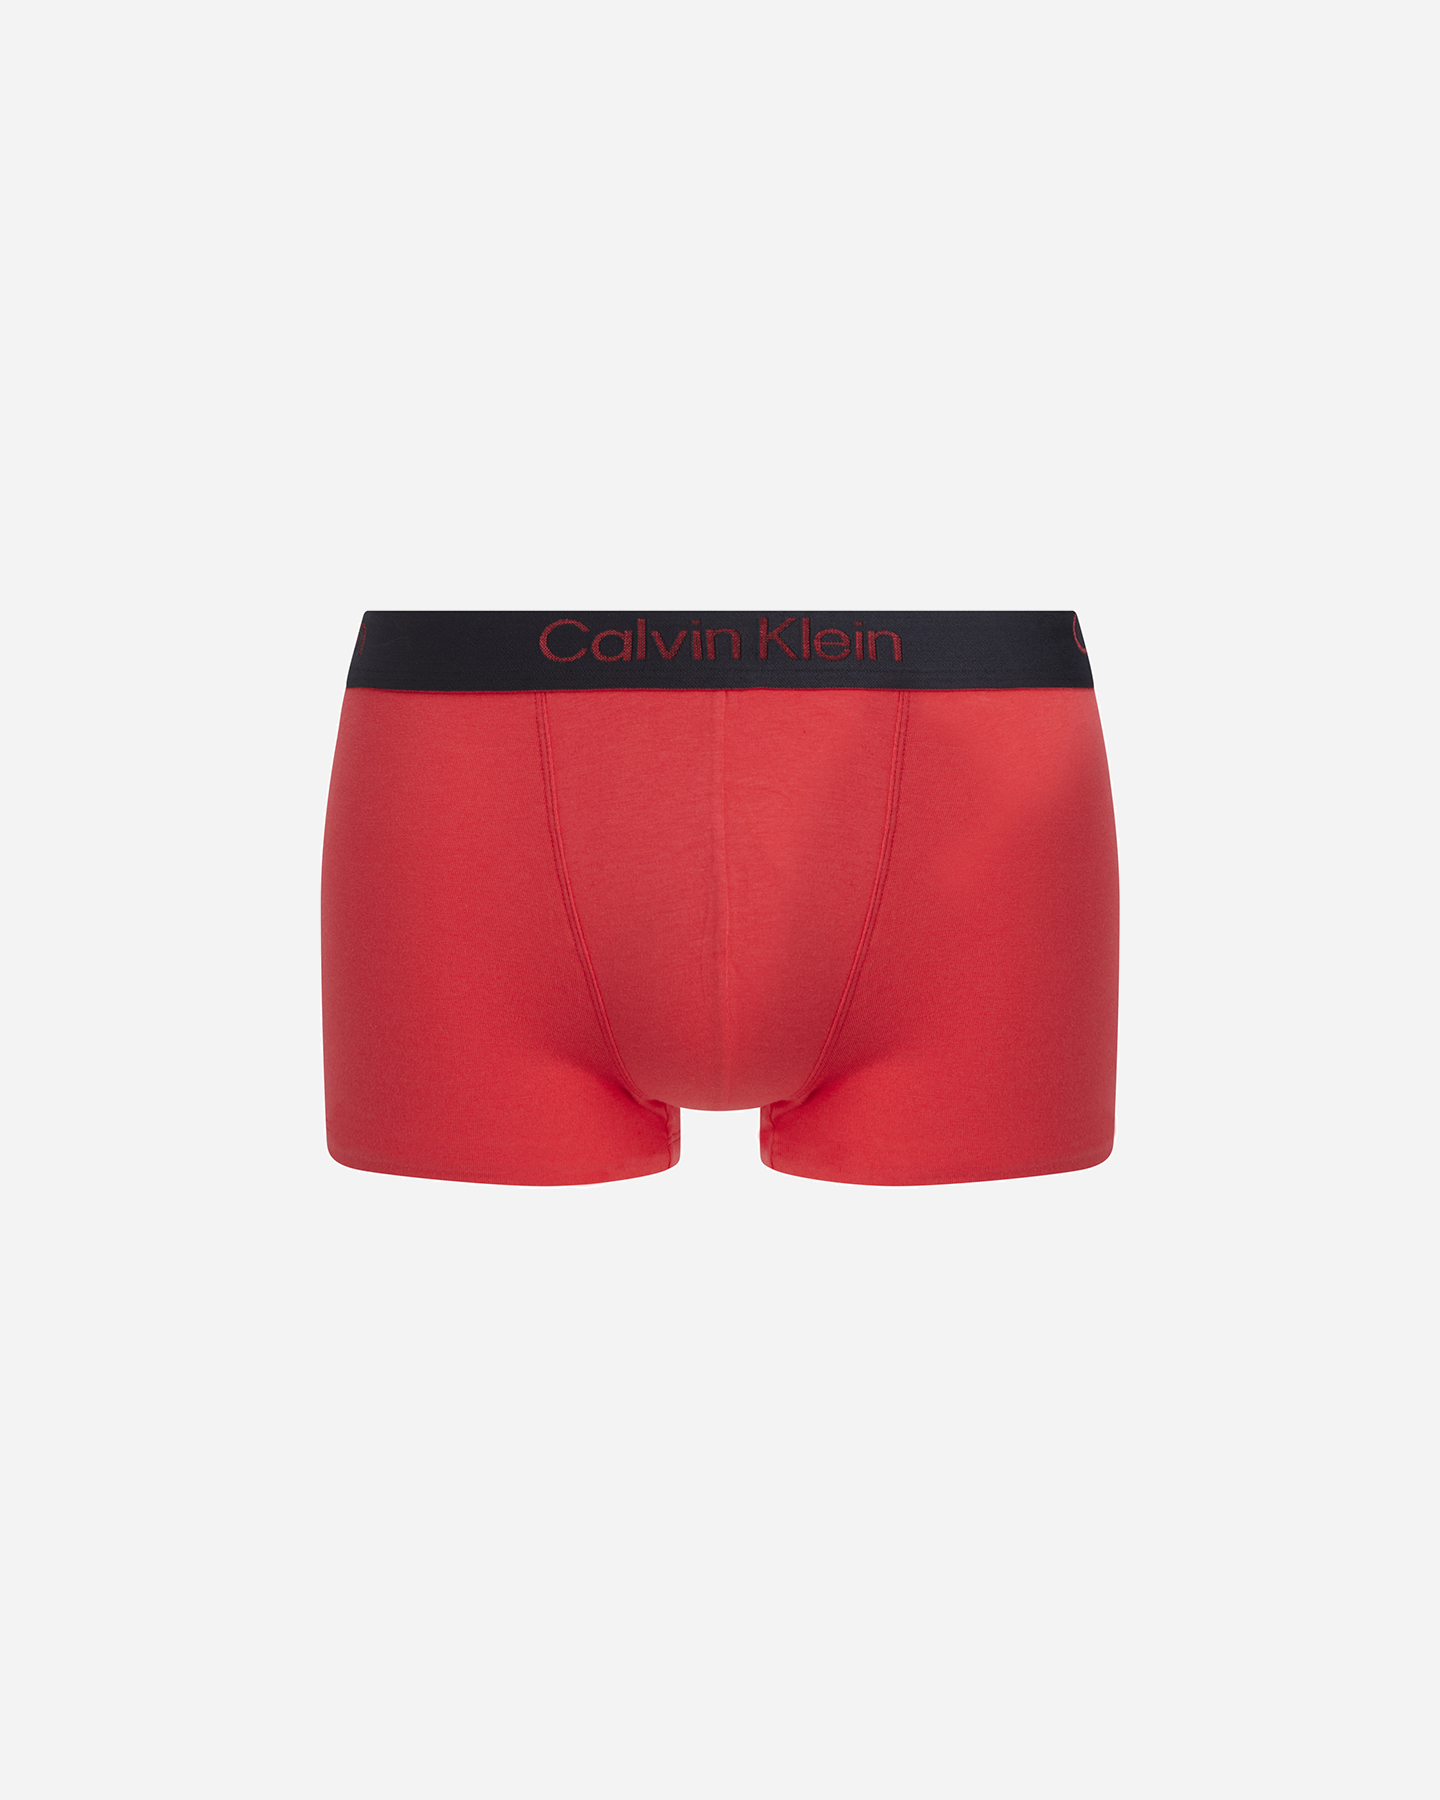 Image of Calvin Klein Underwear Boxer Low Rise M - Intimo - Uomo